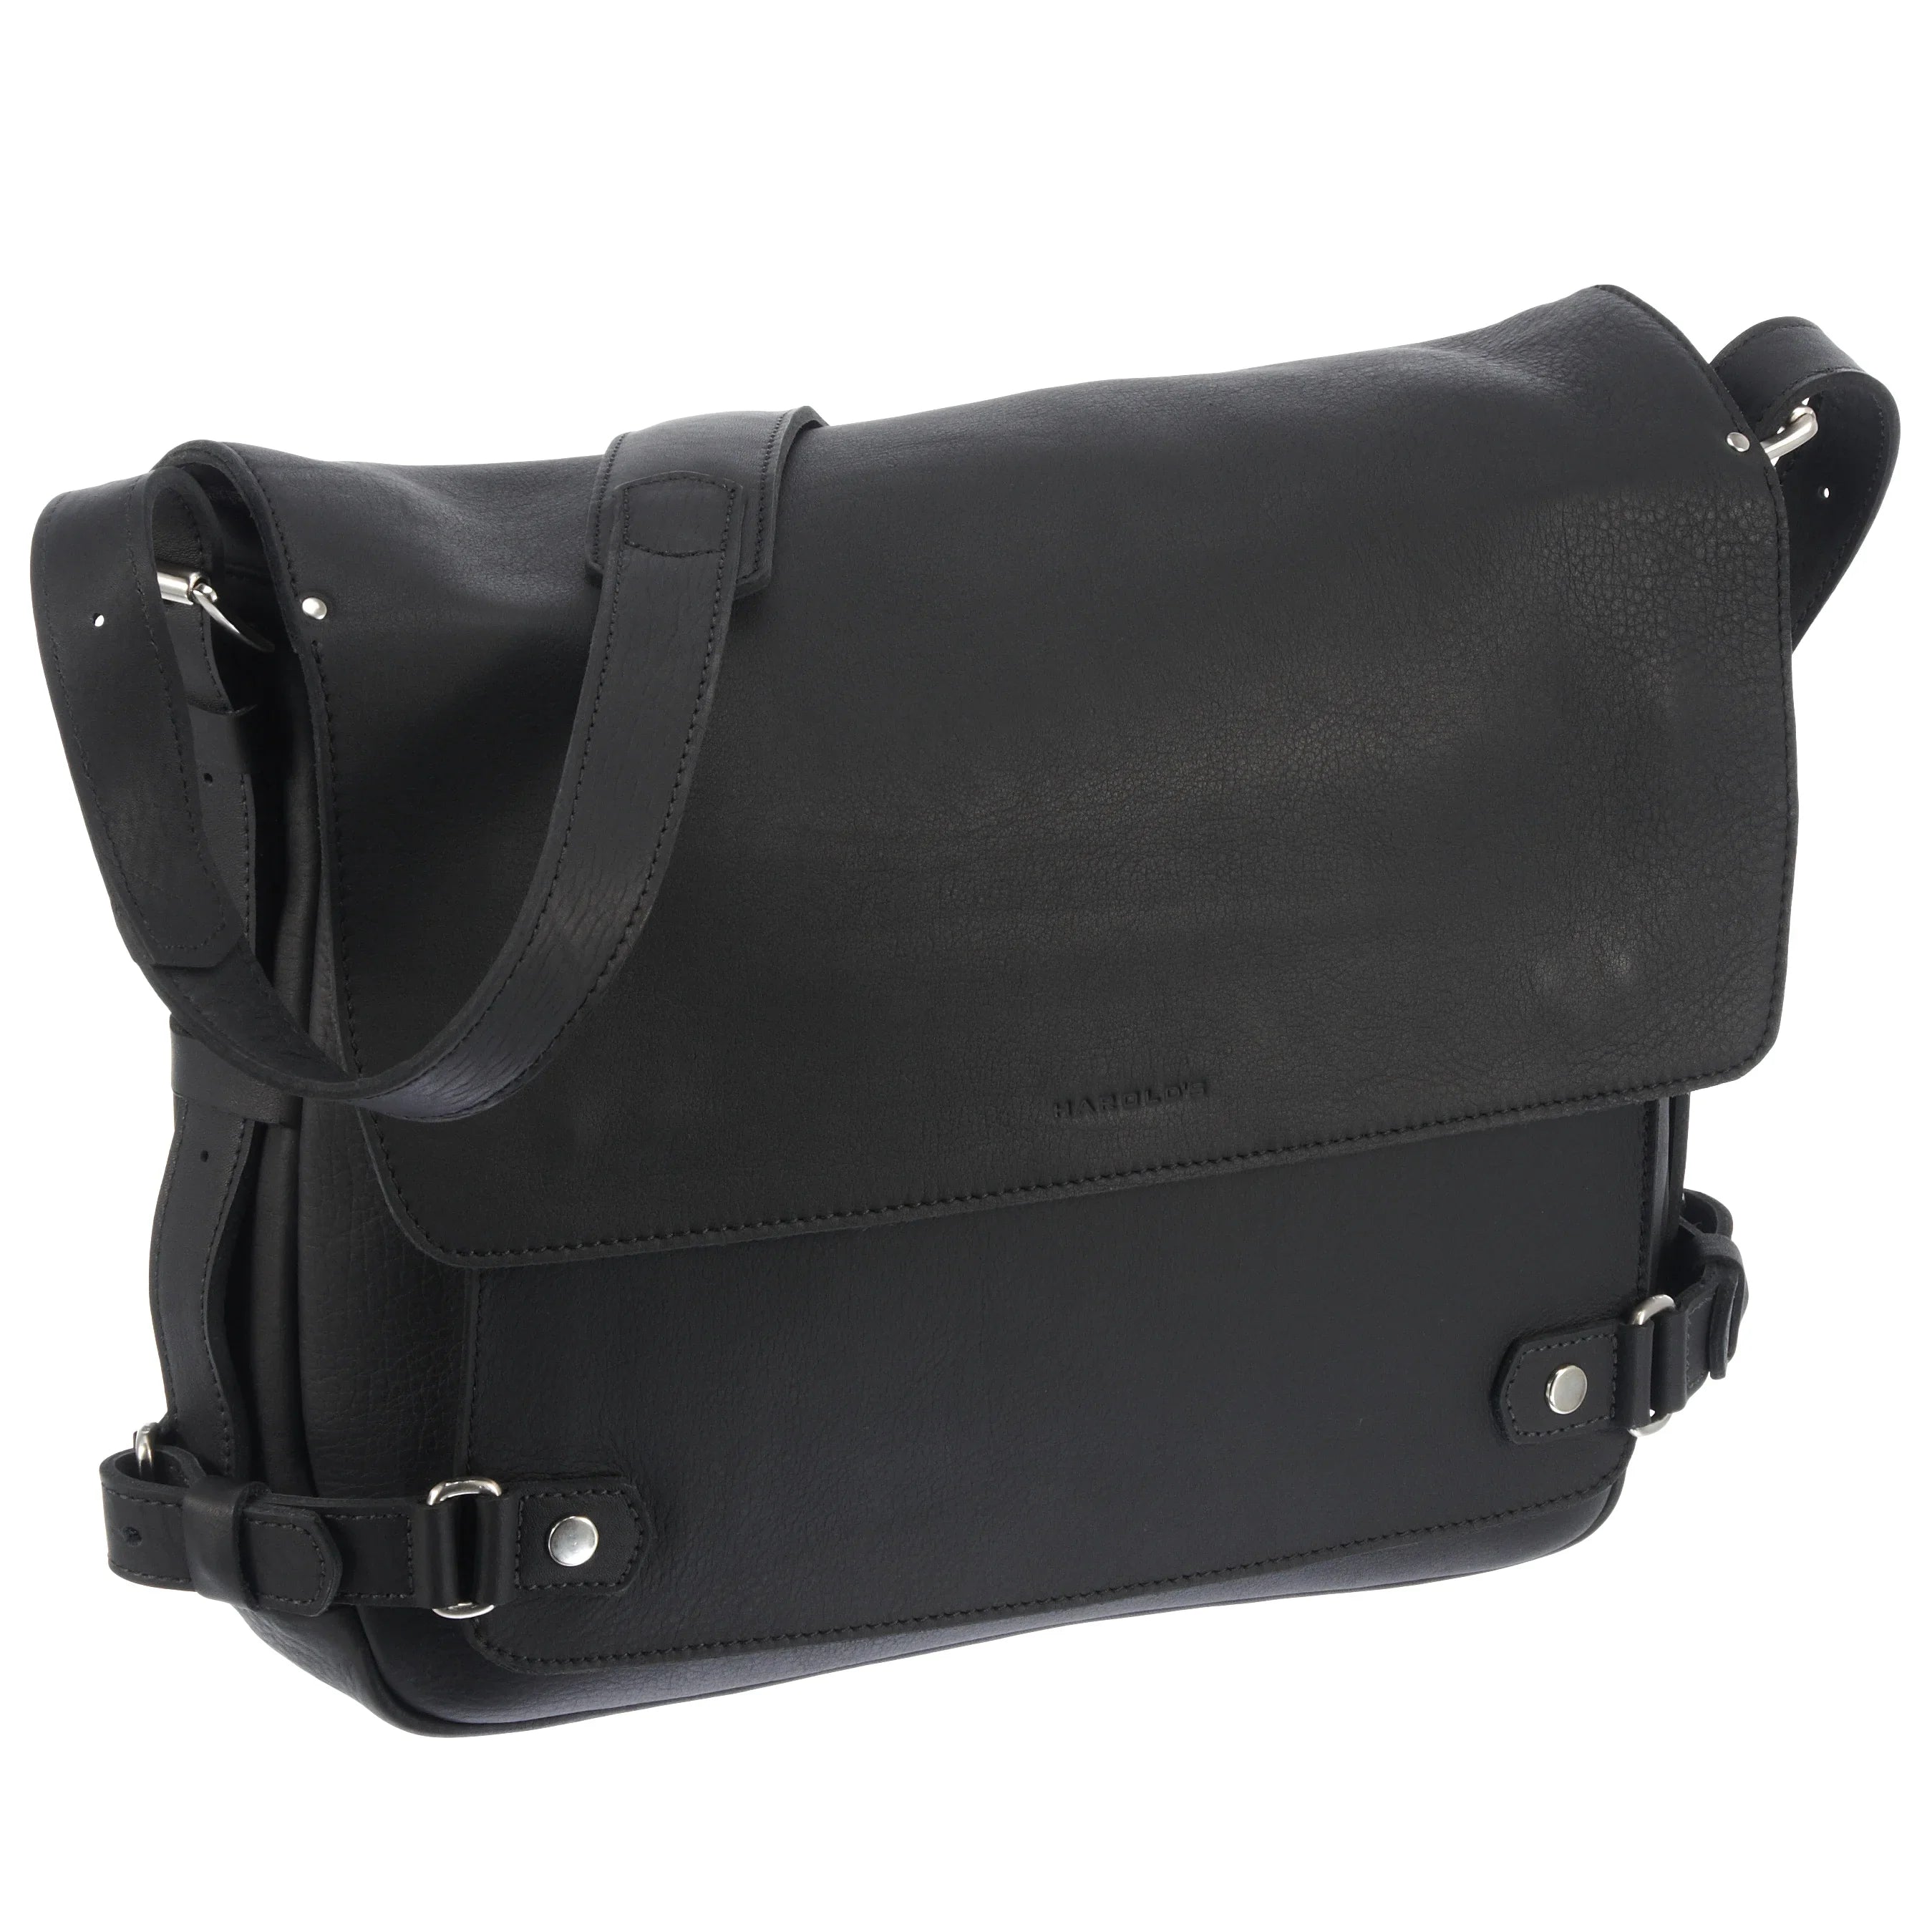 Harold's Ivy Court messenger bag with laptop compartment 37 cm - black